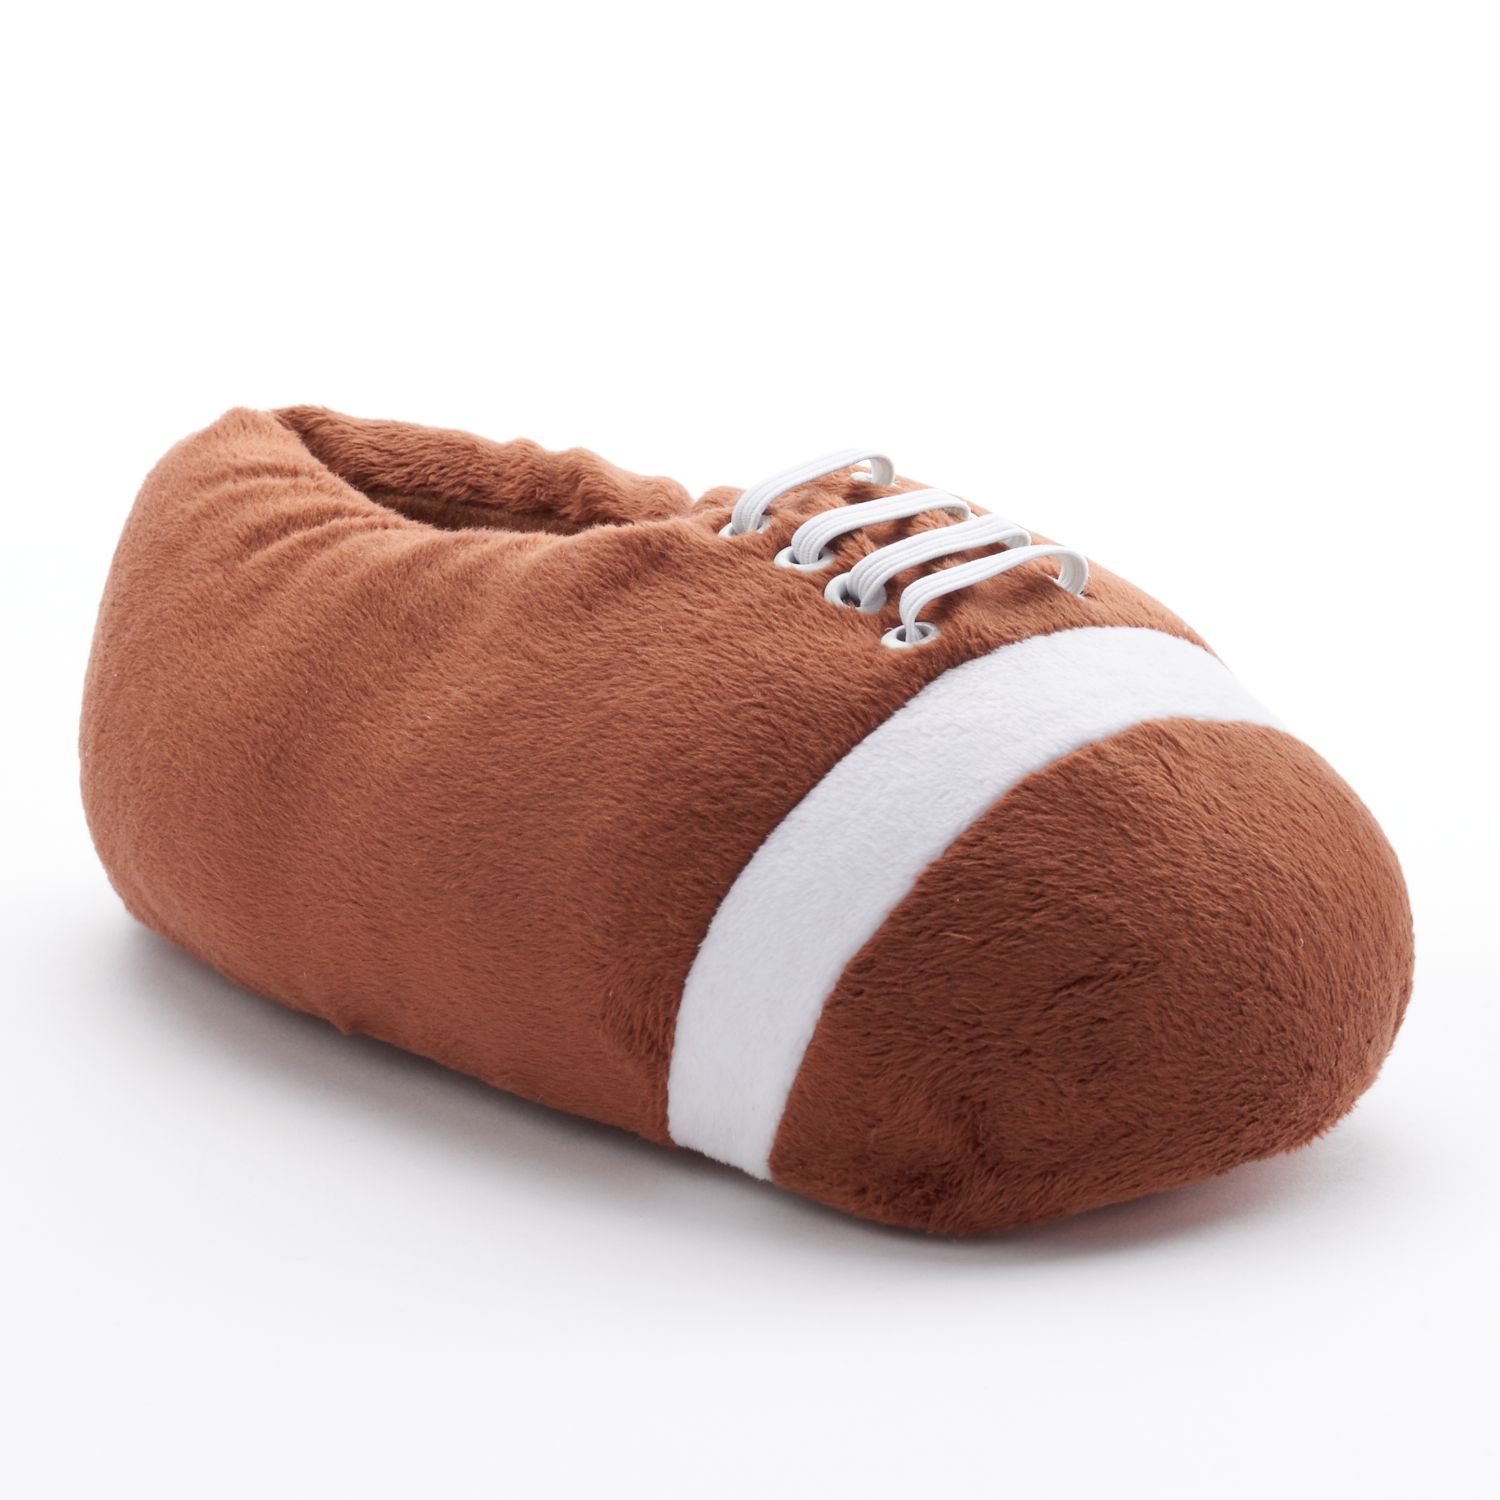 football slippers